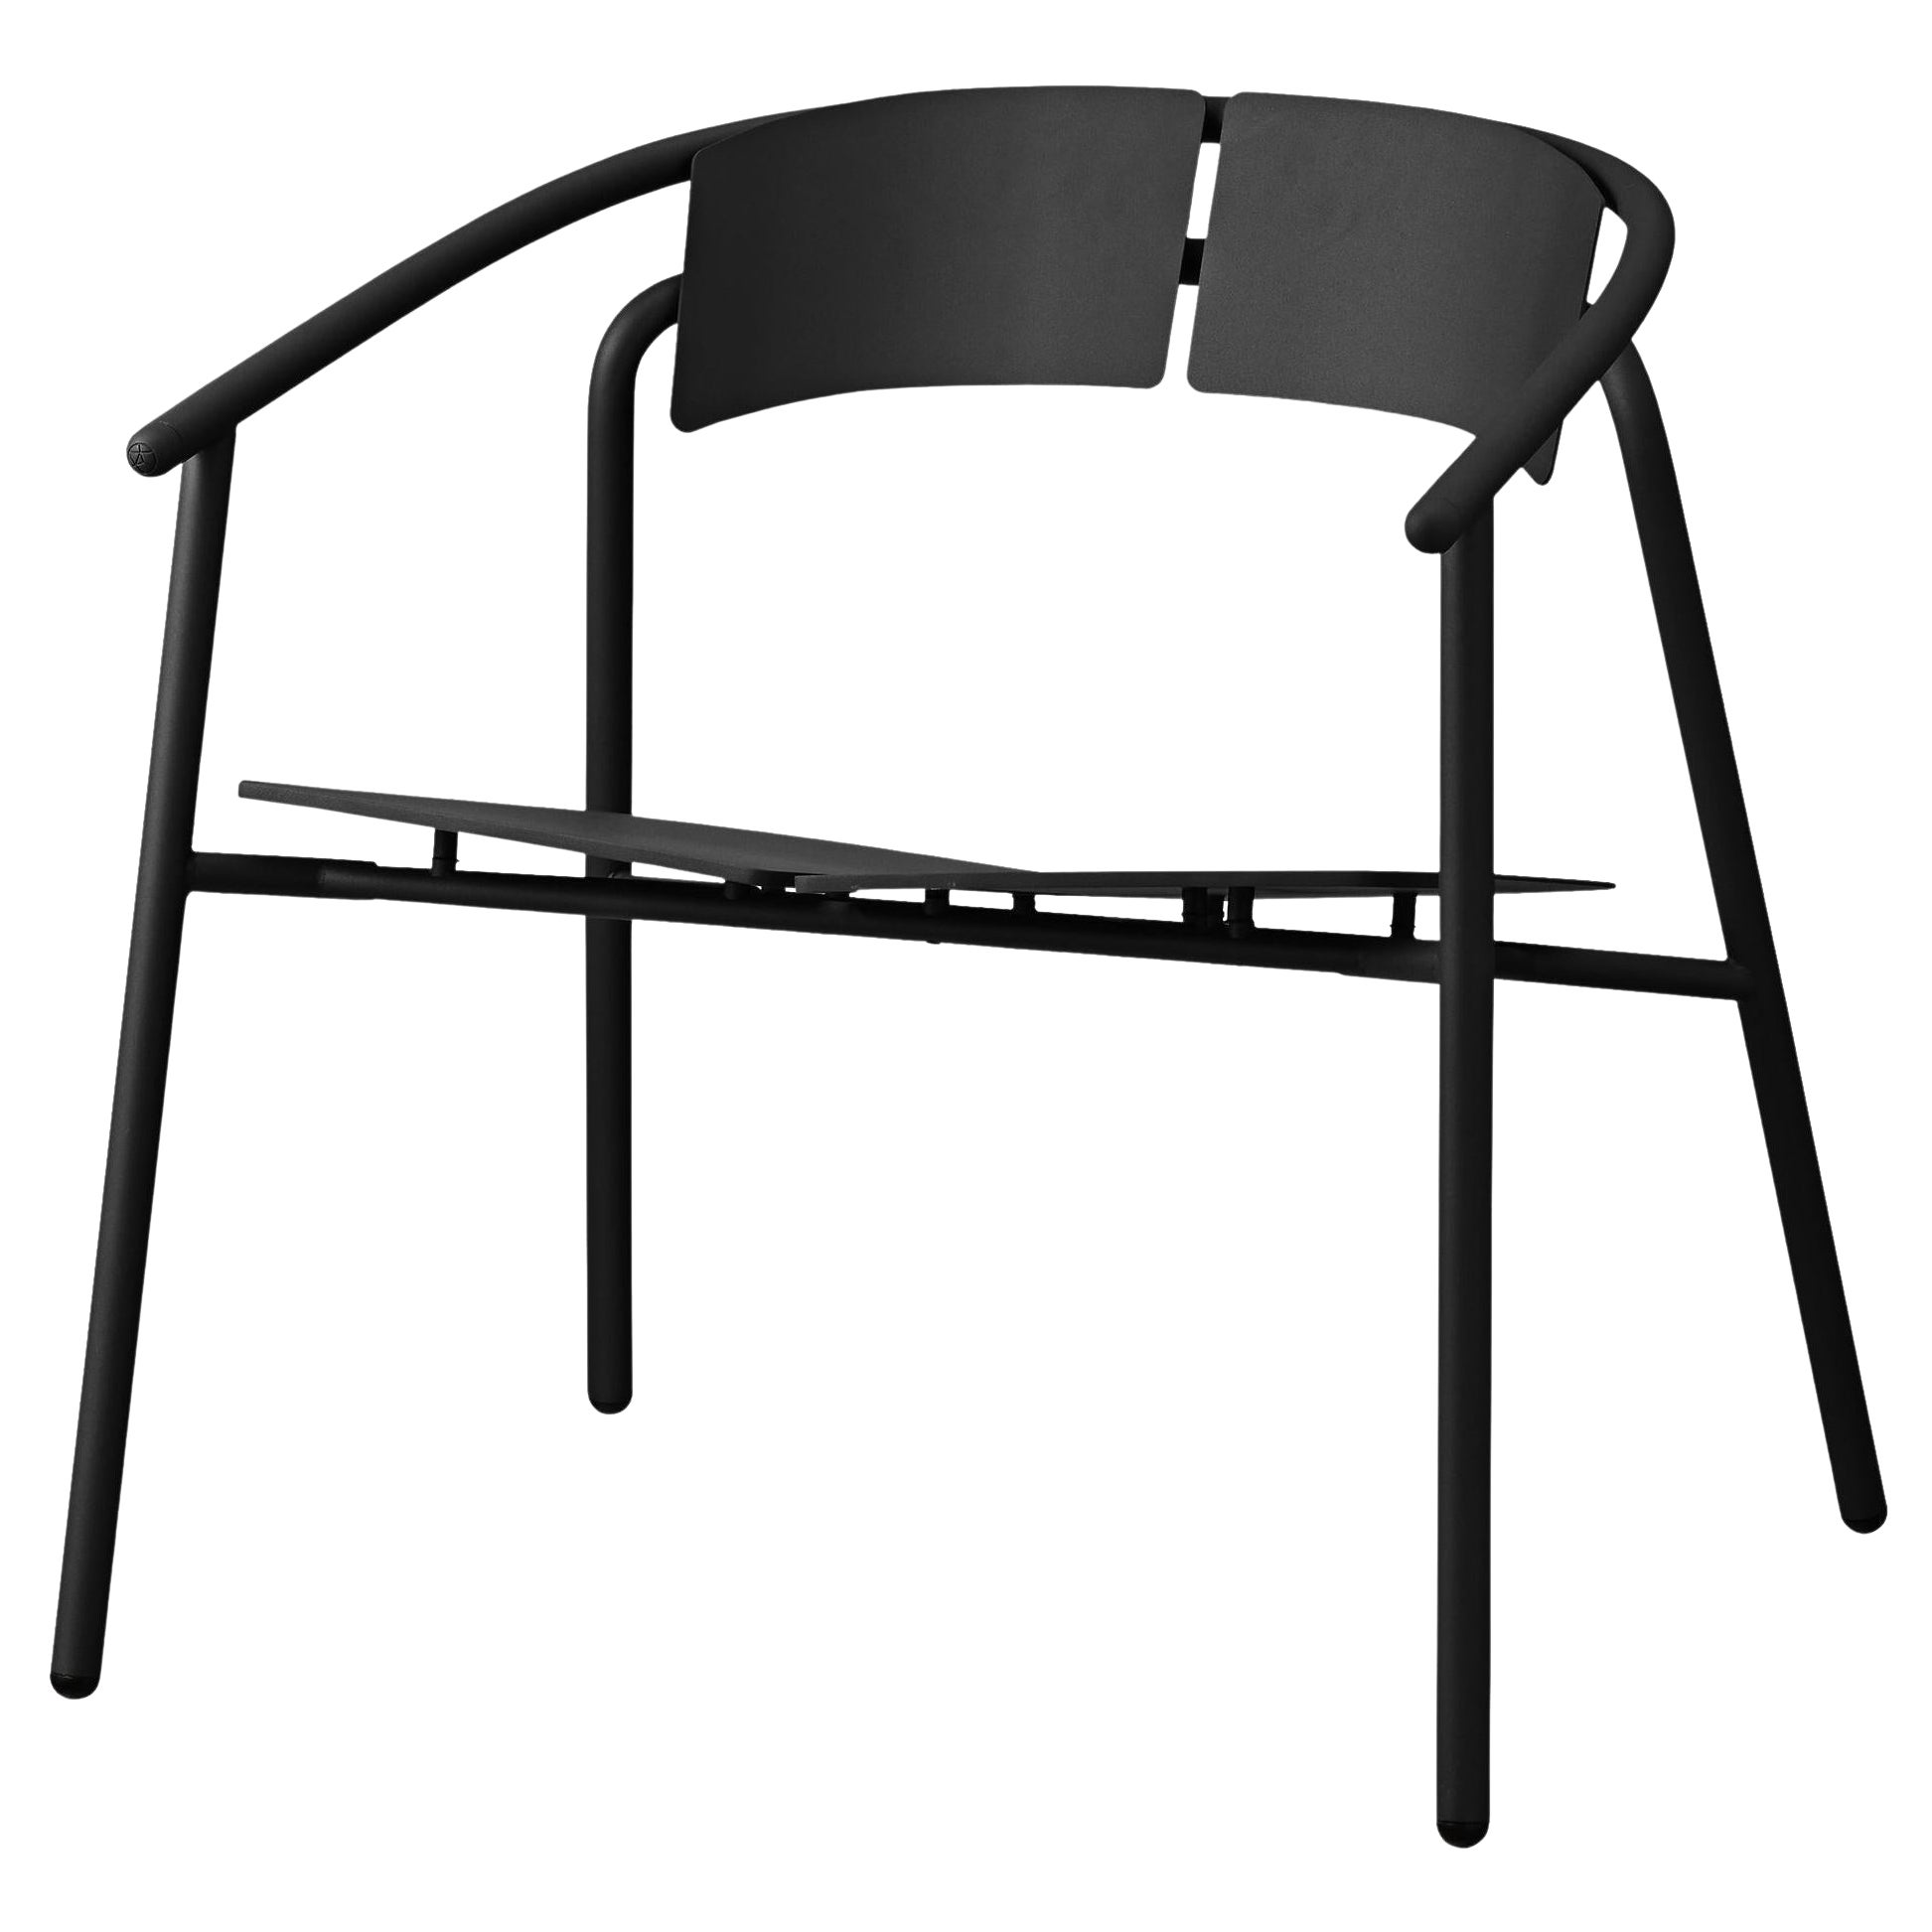 Black Minimalist Lounge Chair